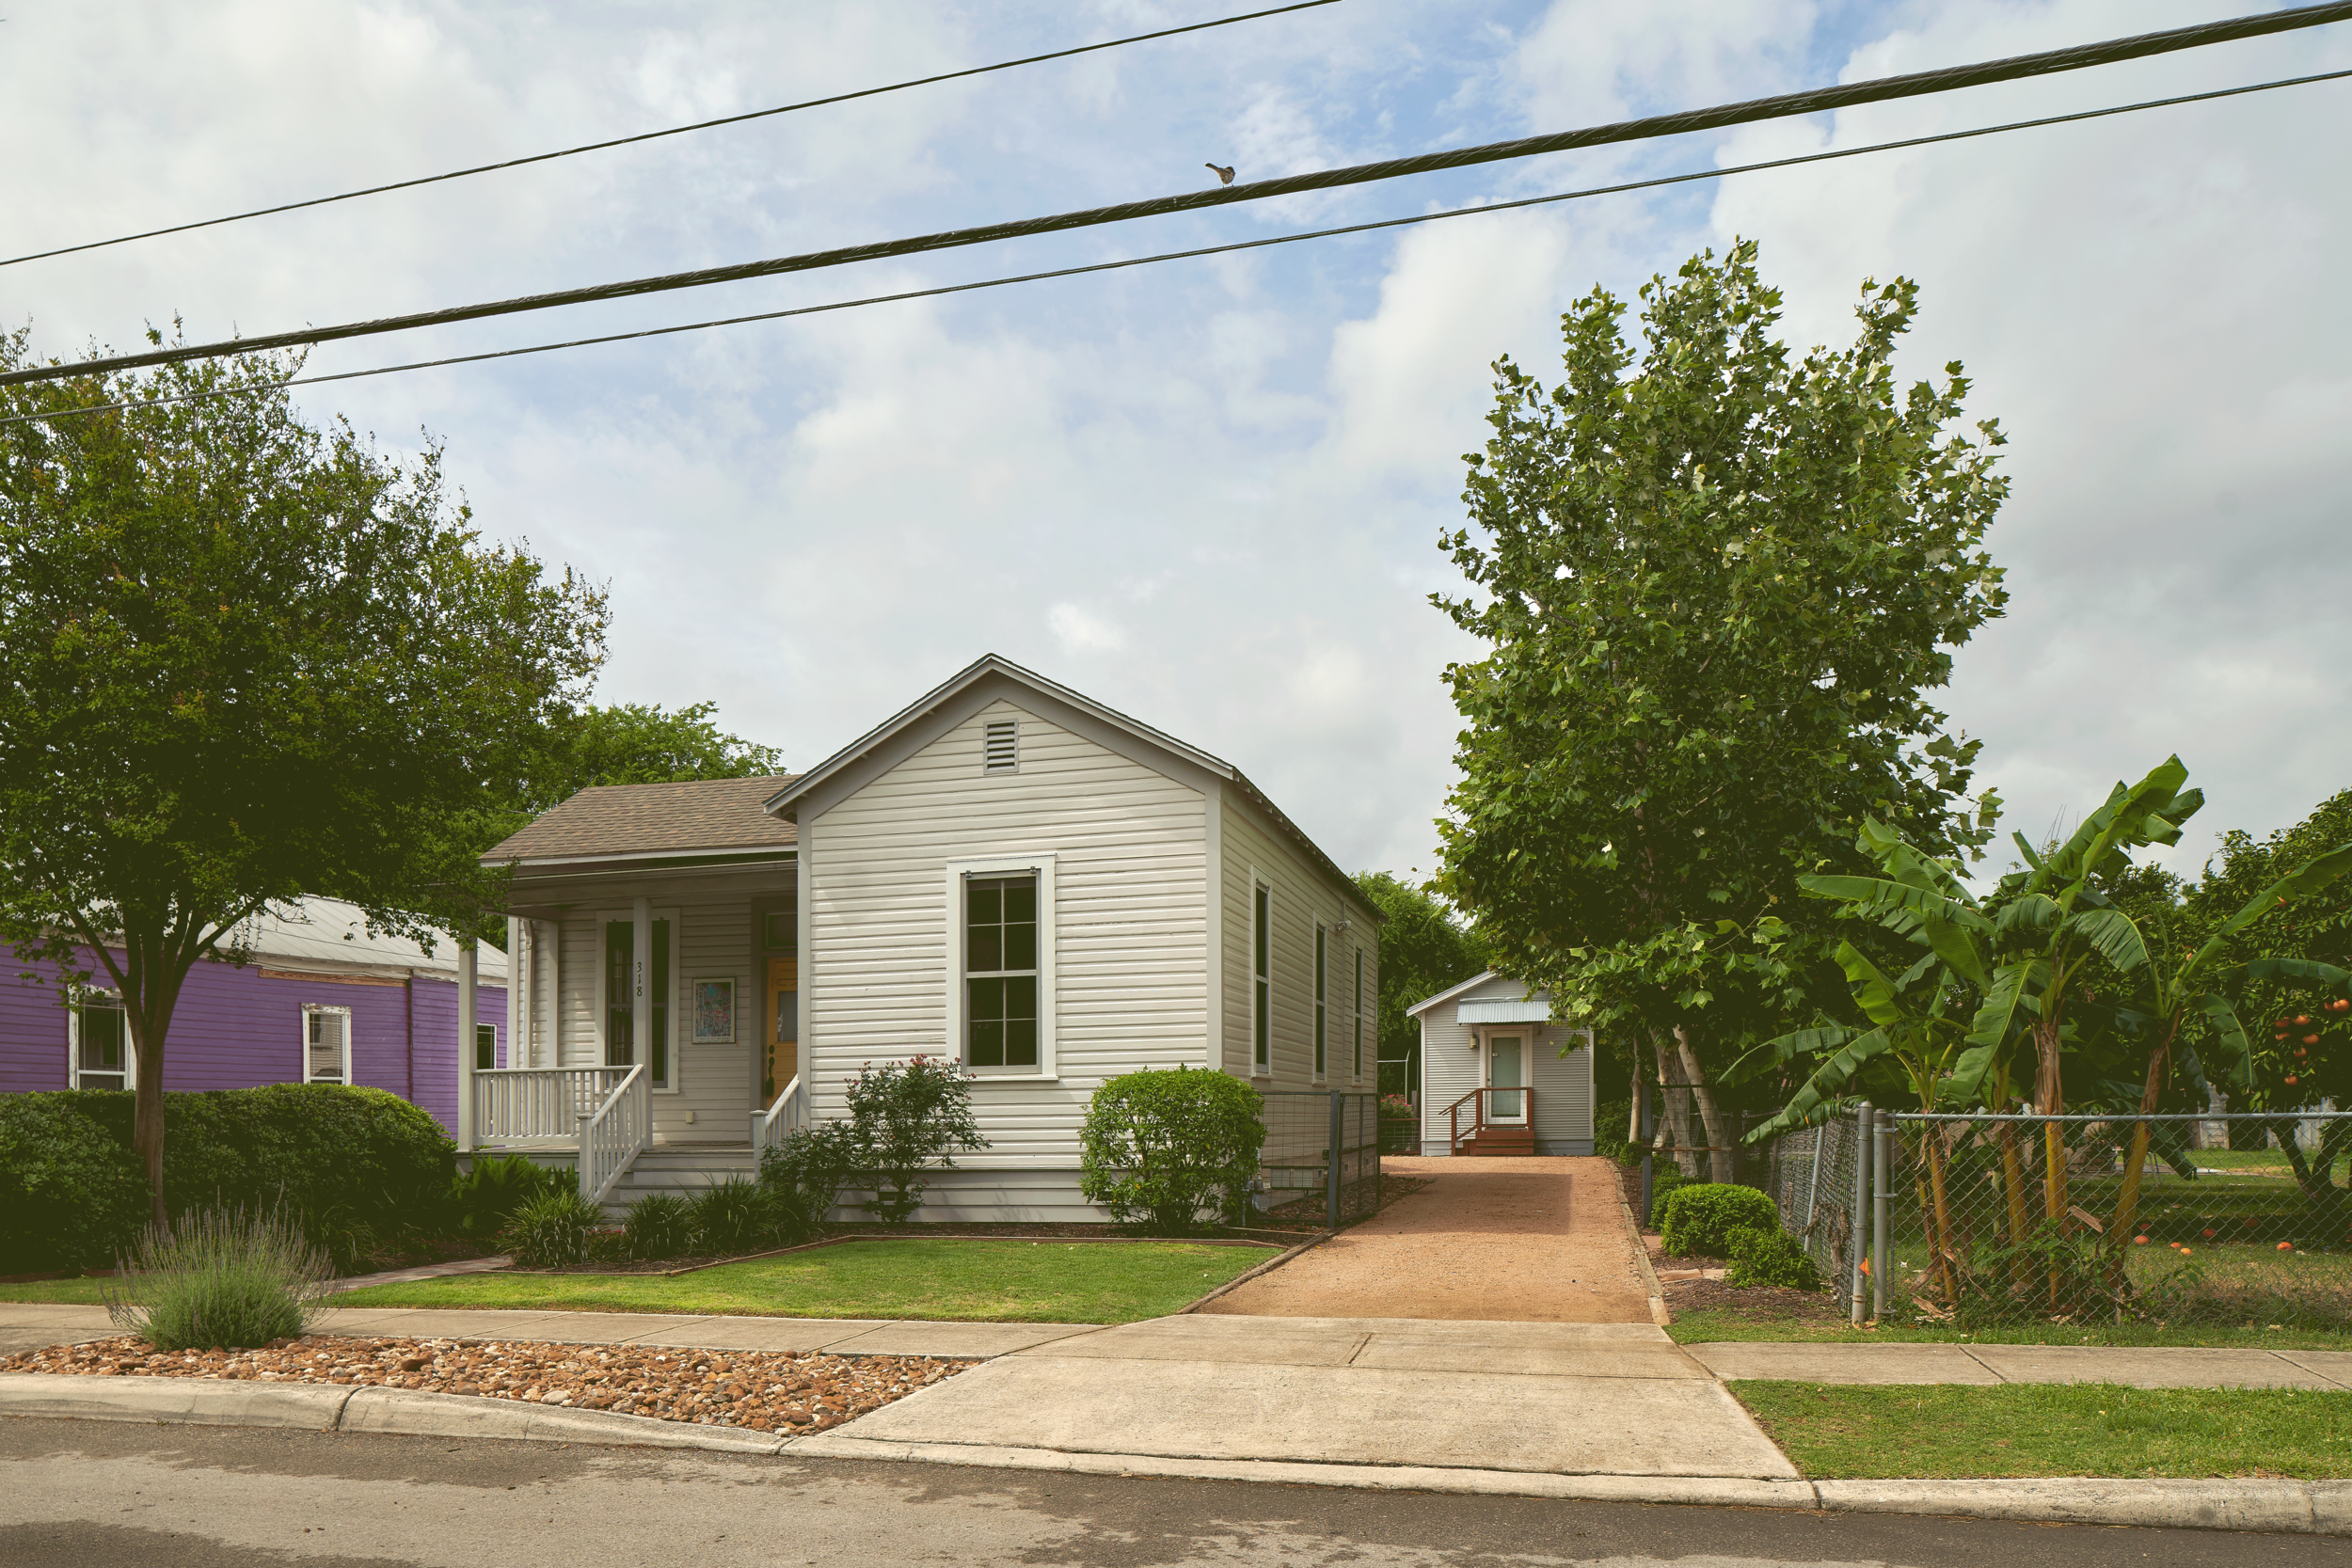 Exterior View, Leigh Street House + Shotgun  House, San Antonio, Texas, 2015. Photo by Dror Baldinger